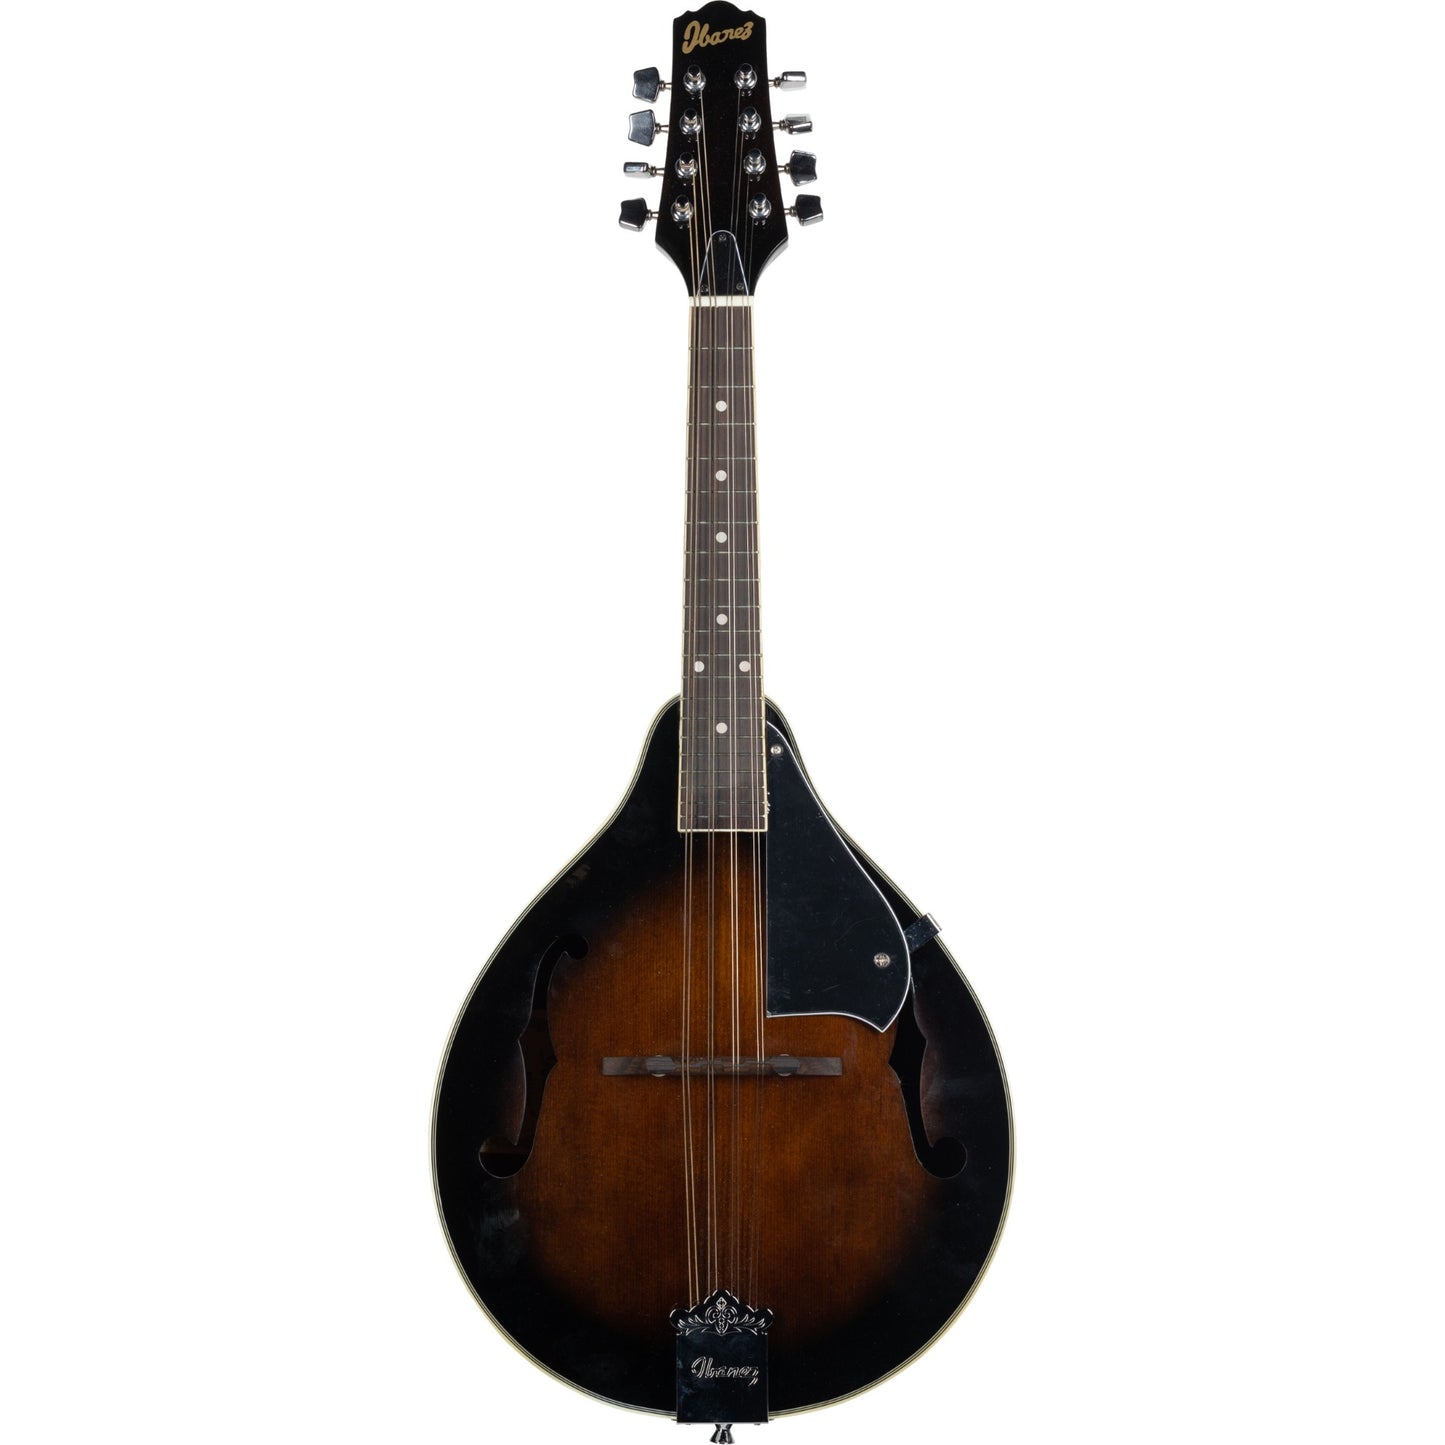 Ibanez M510DVS A-Style Mandolin, Dark Violin Sunburst